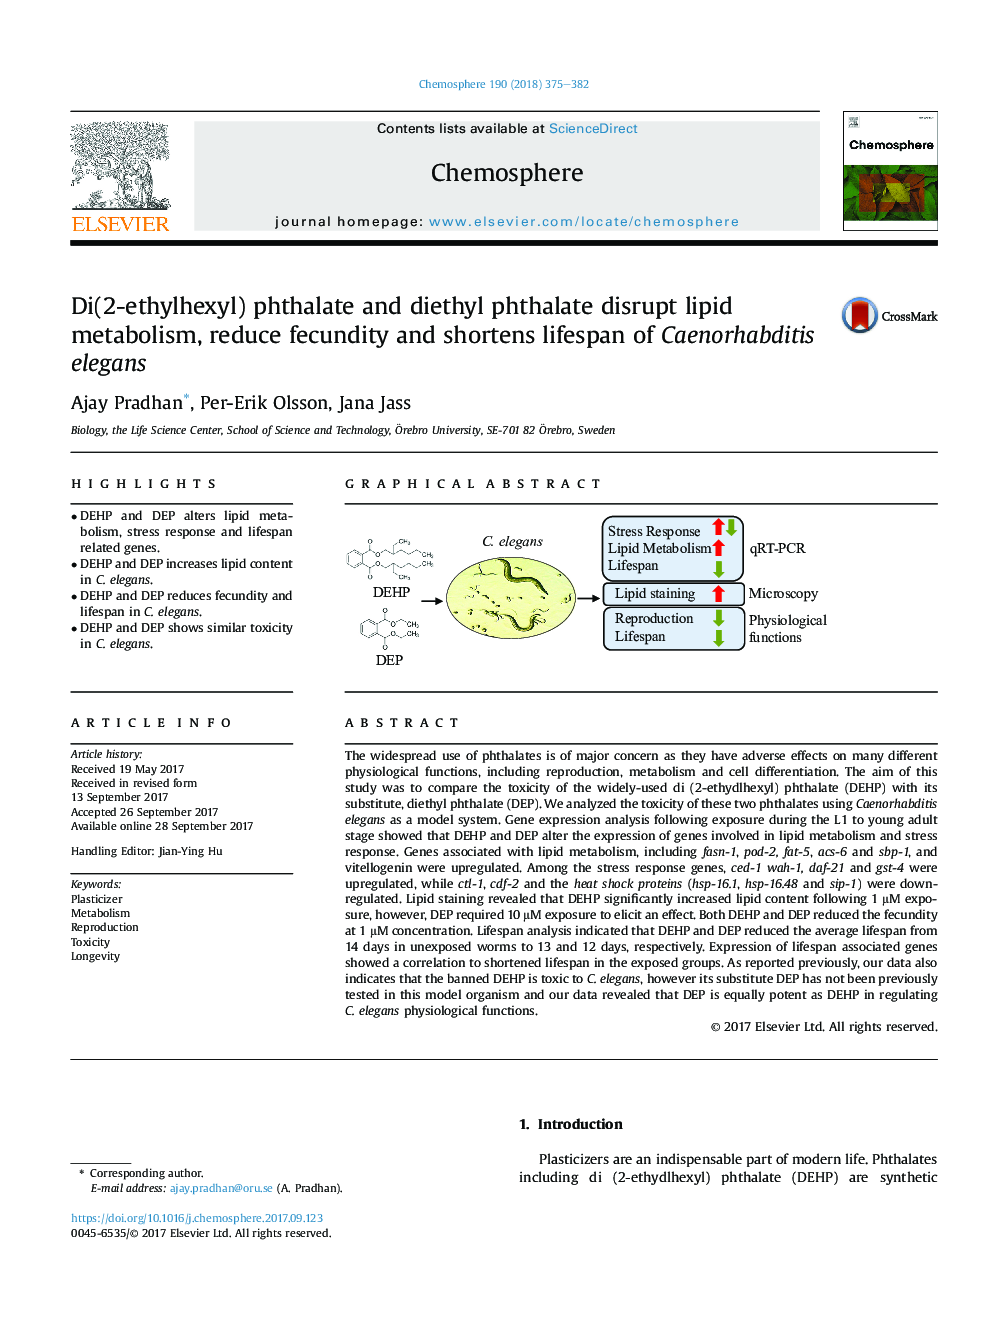 Di(2-ethylhexyl) phthalate and diethyl phthalate disrupt lipid metabolism, reduce fecundity and shortens lifespan of Caenorhabditis elegans